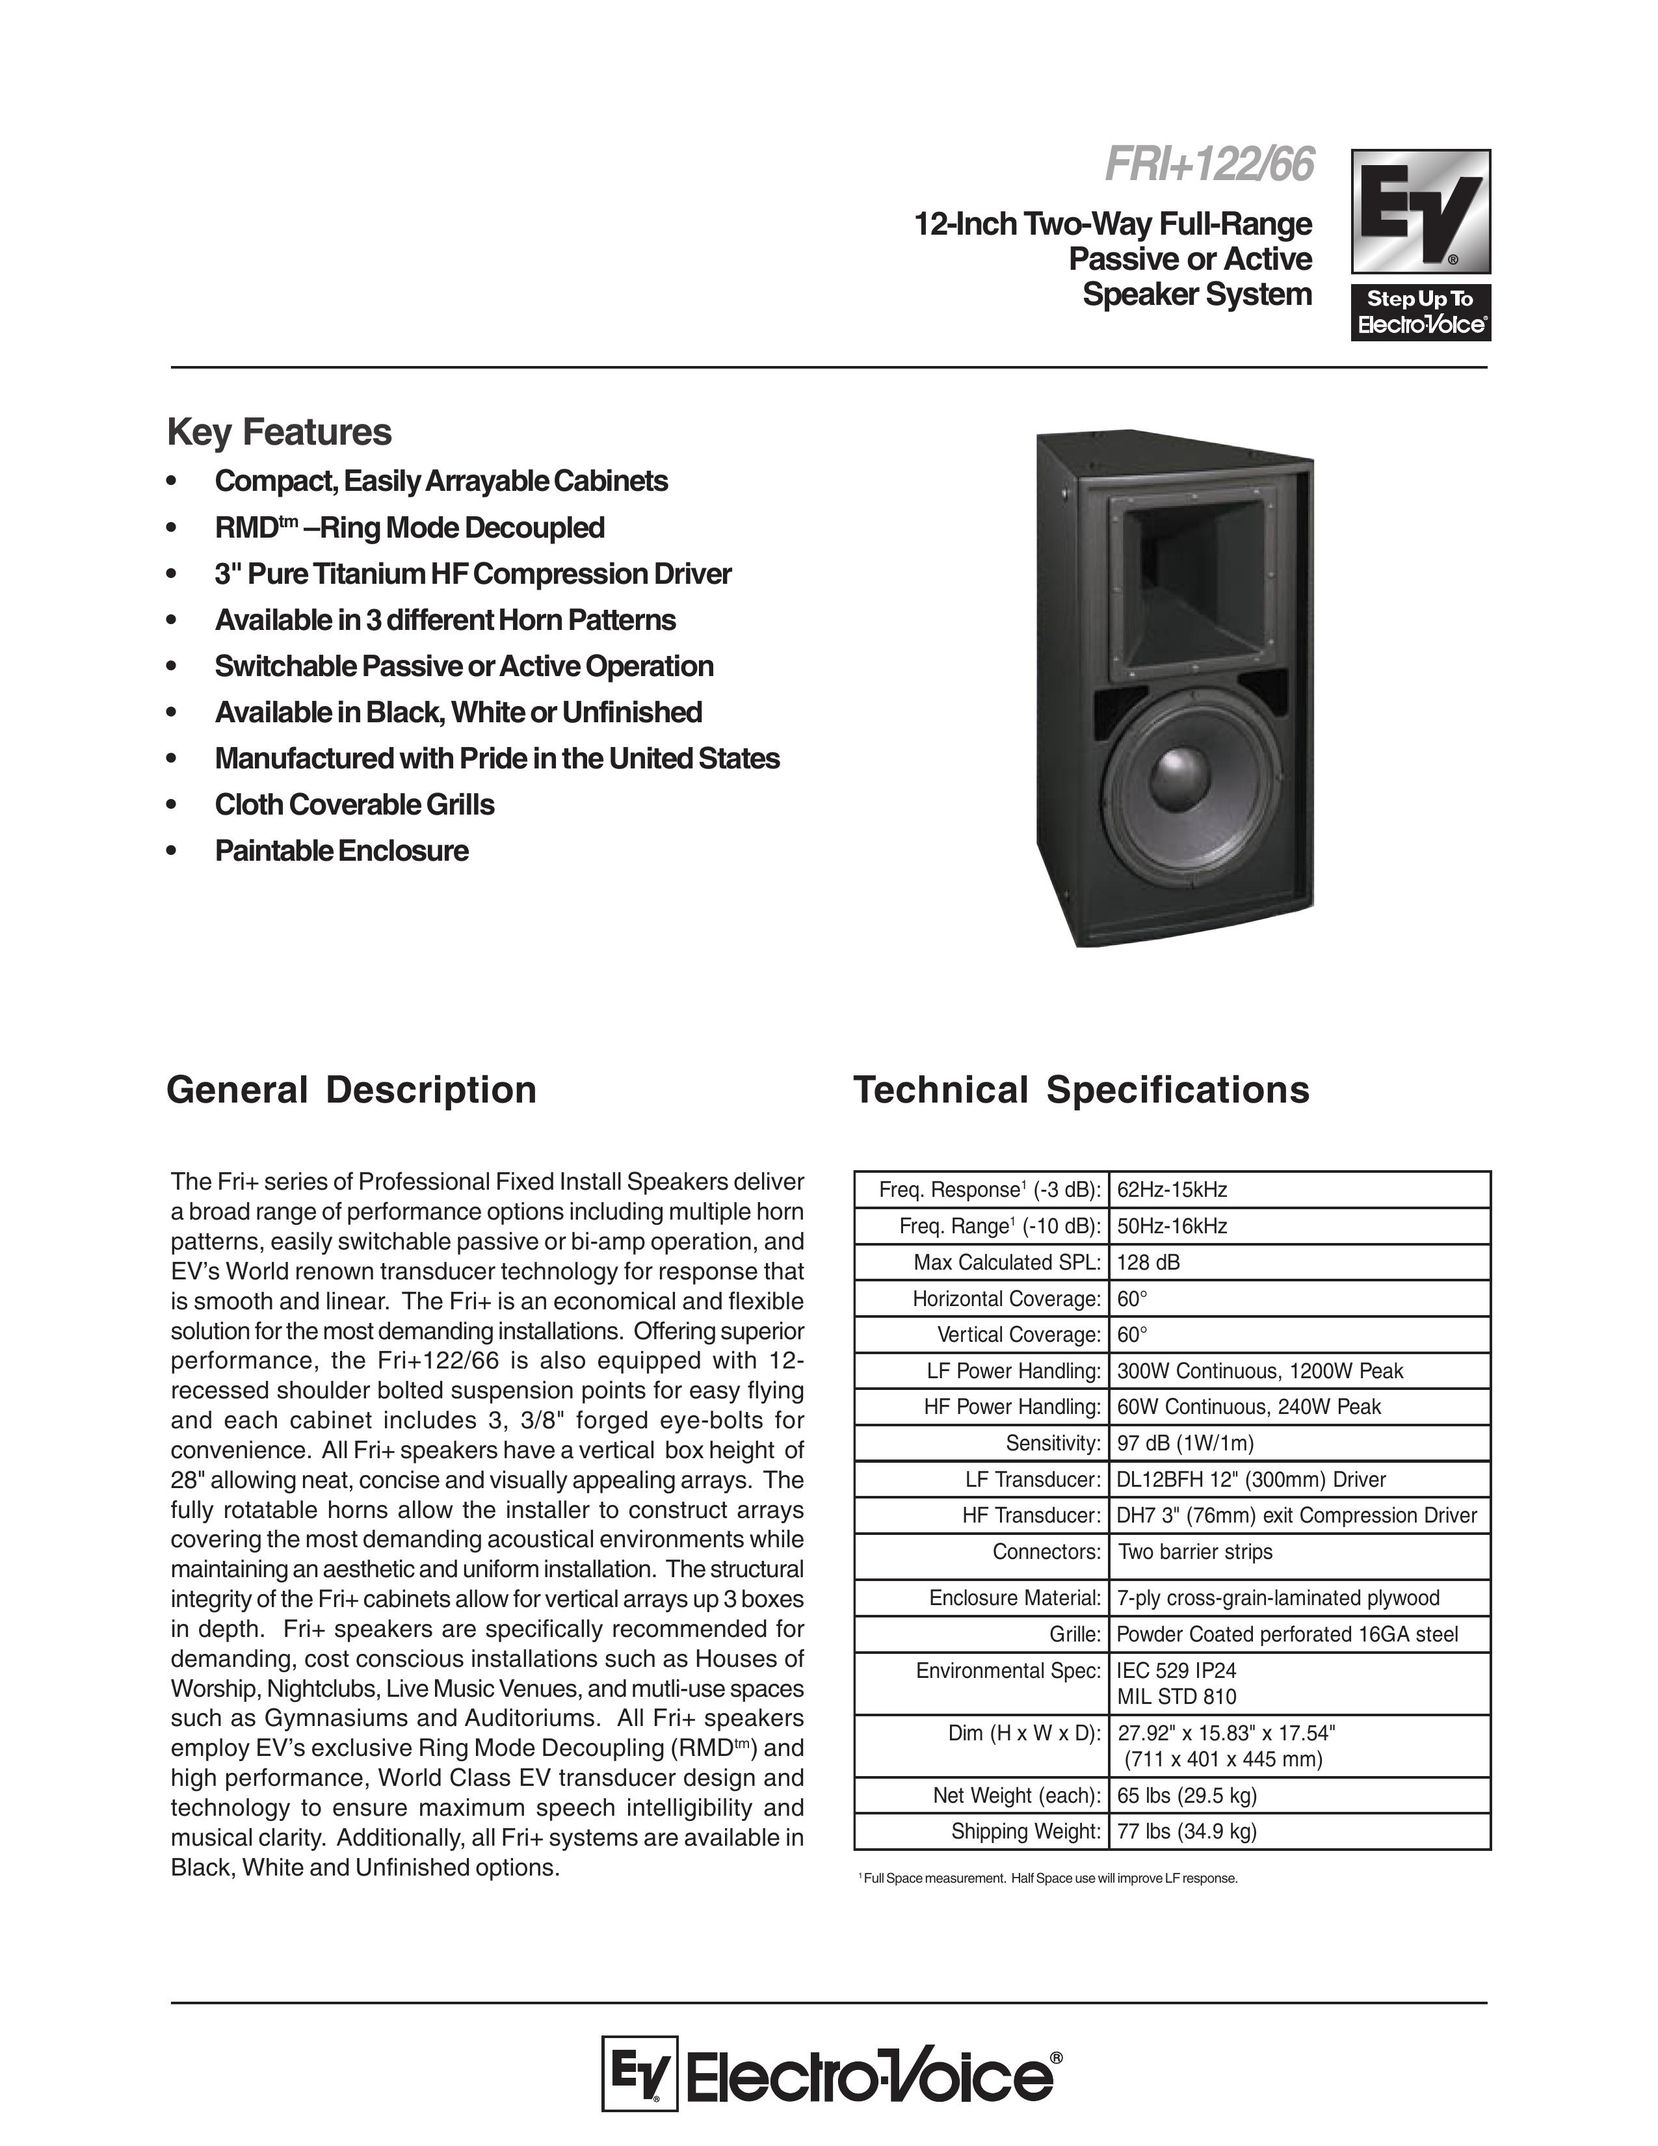 Electro-Voice FRi+122/66 Speaker System User Manual